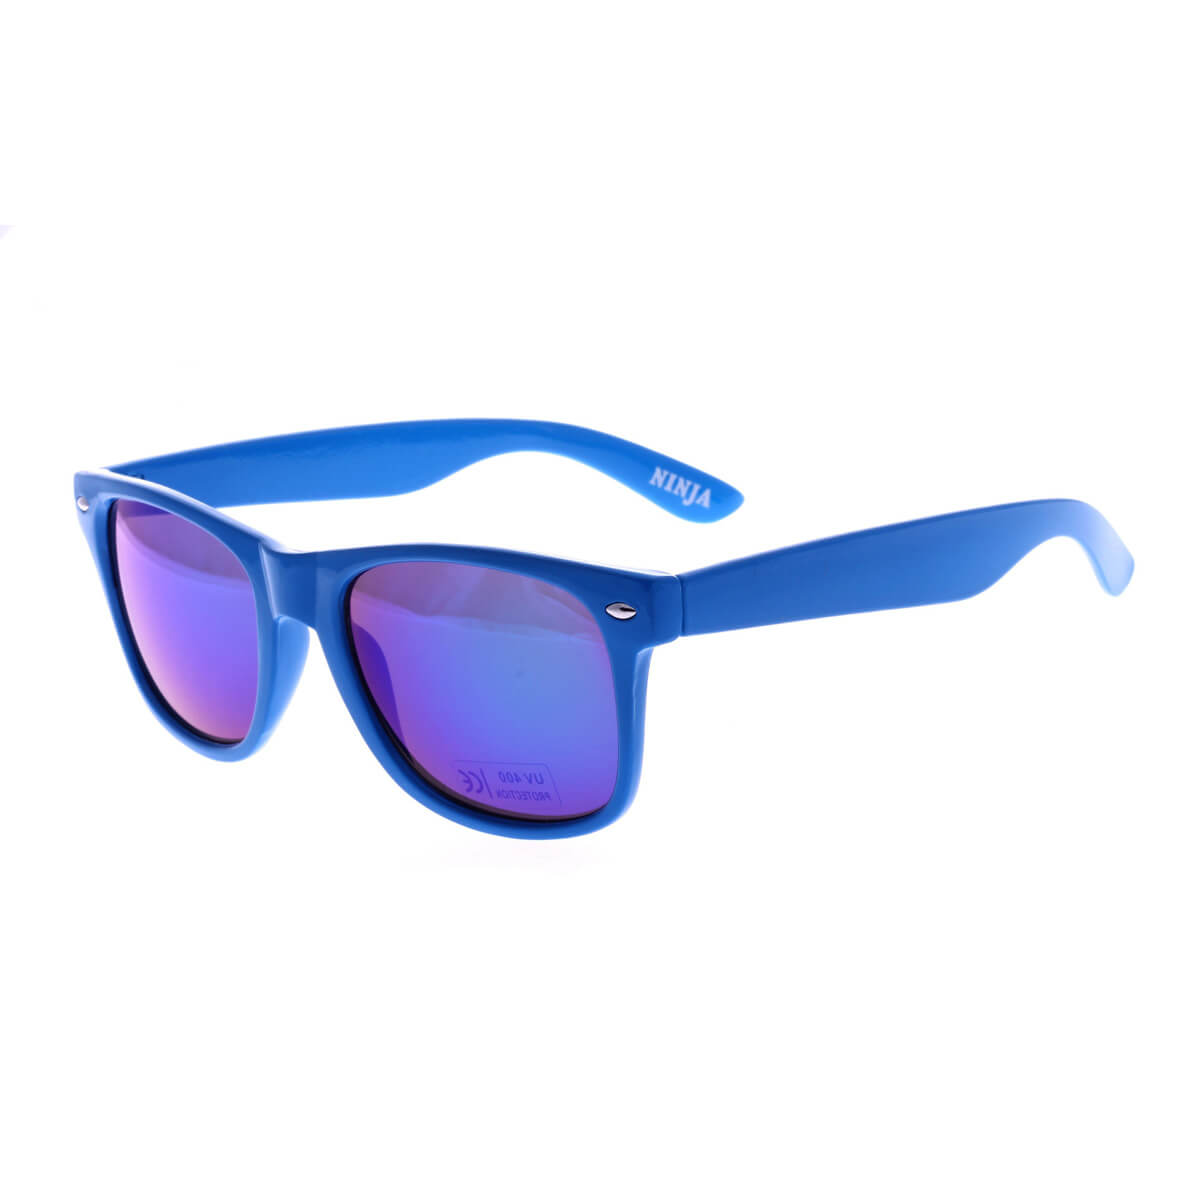 Blue Mirror sunglasses